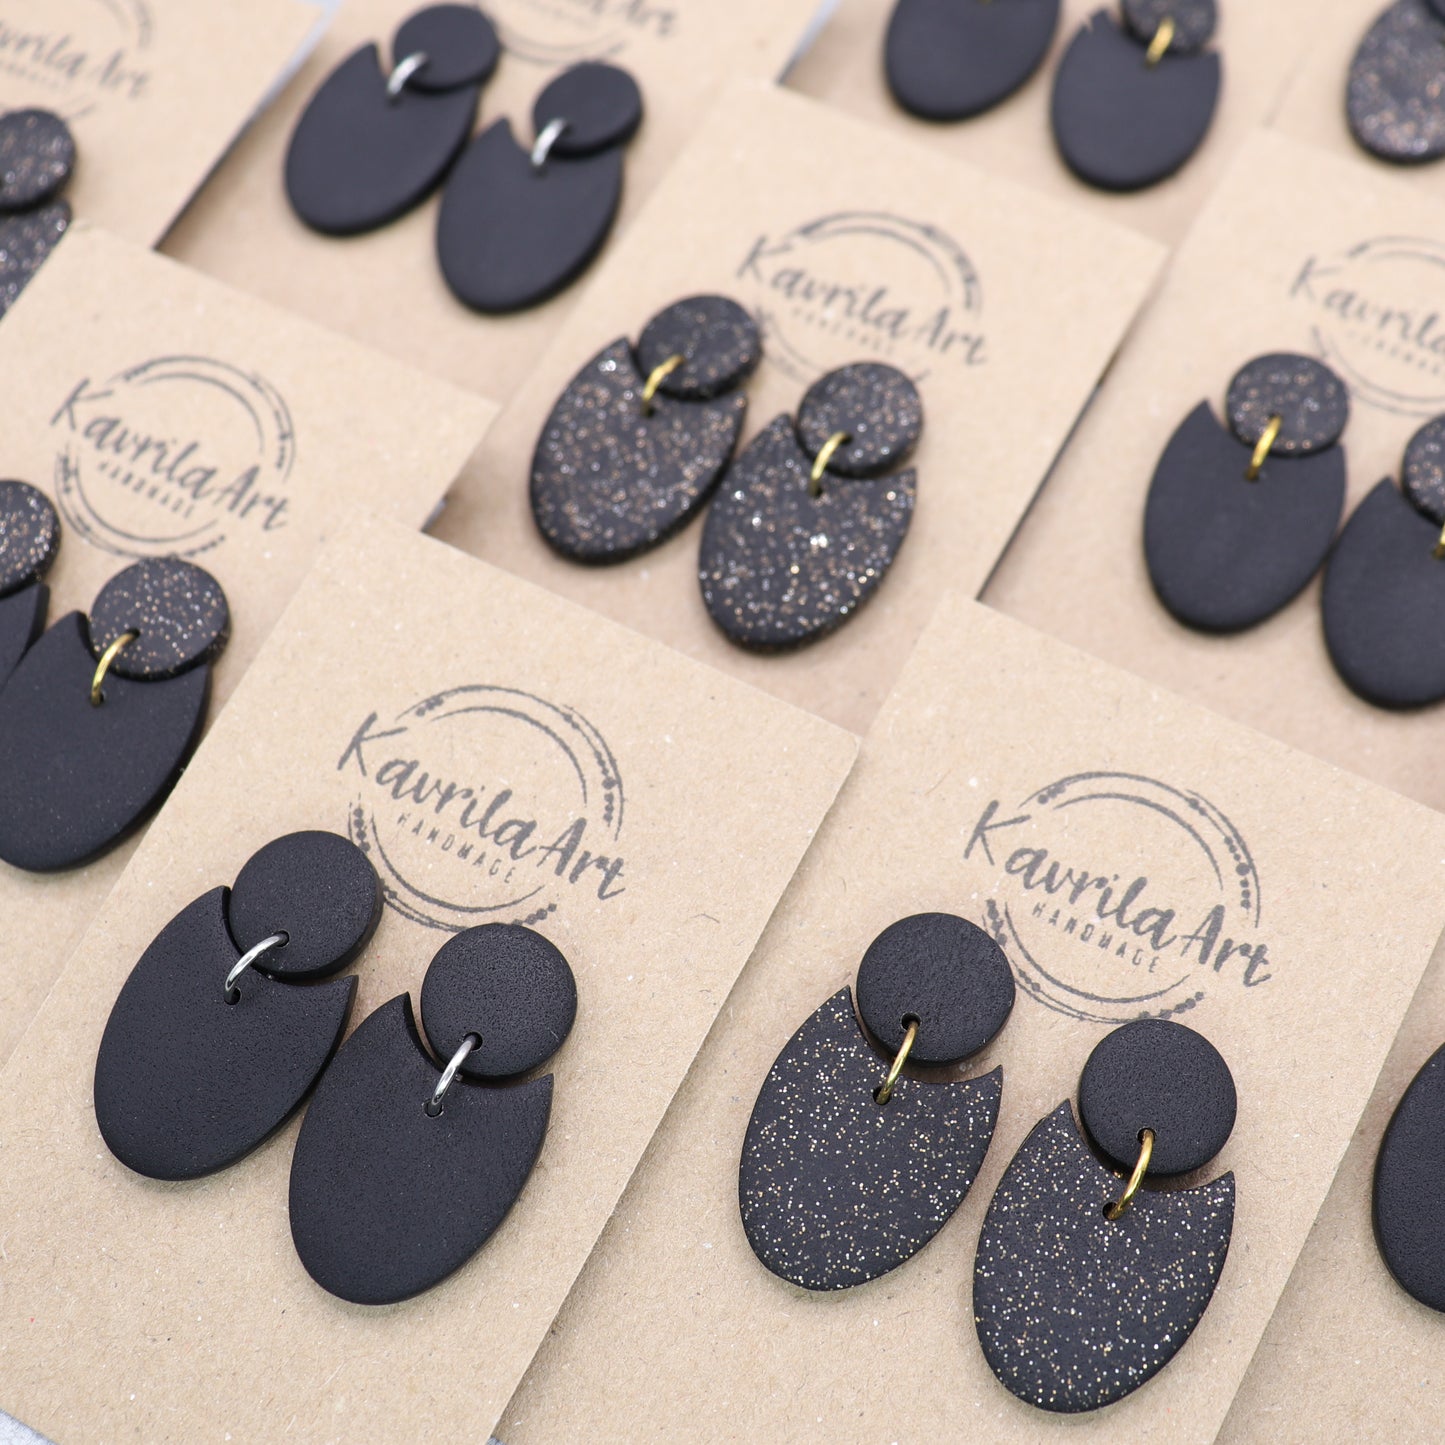 Black geometric earrings. Handmade polymer clay earrings.